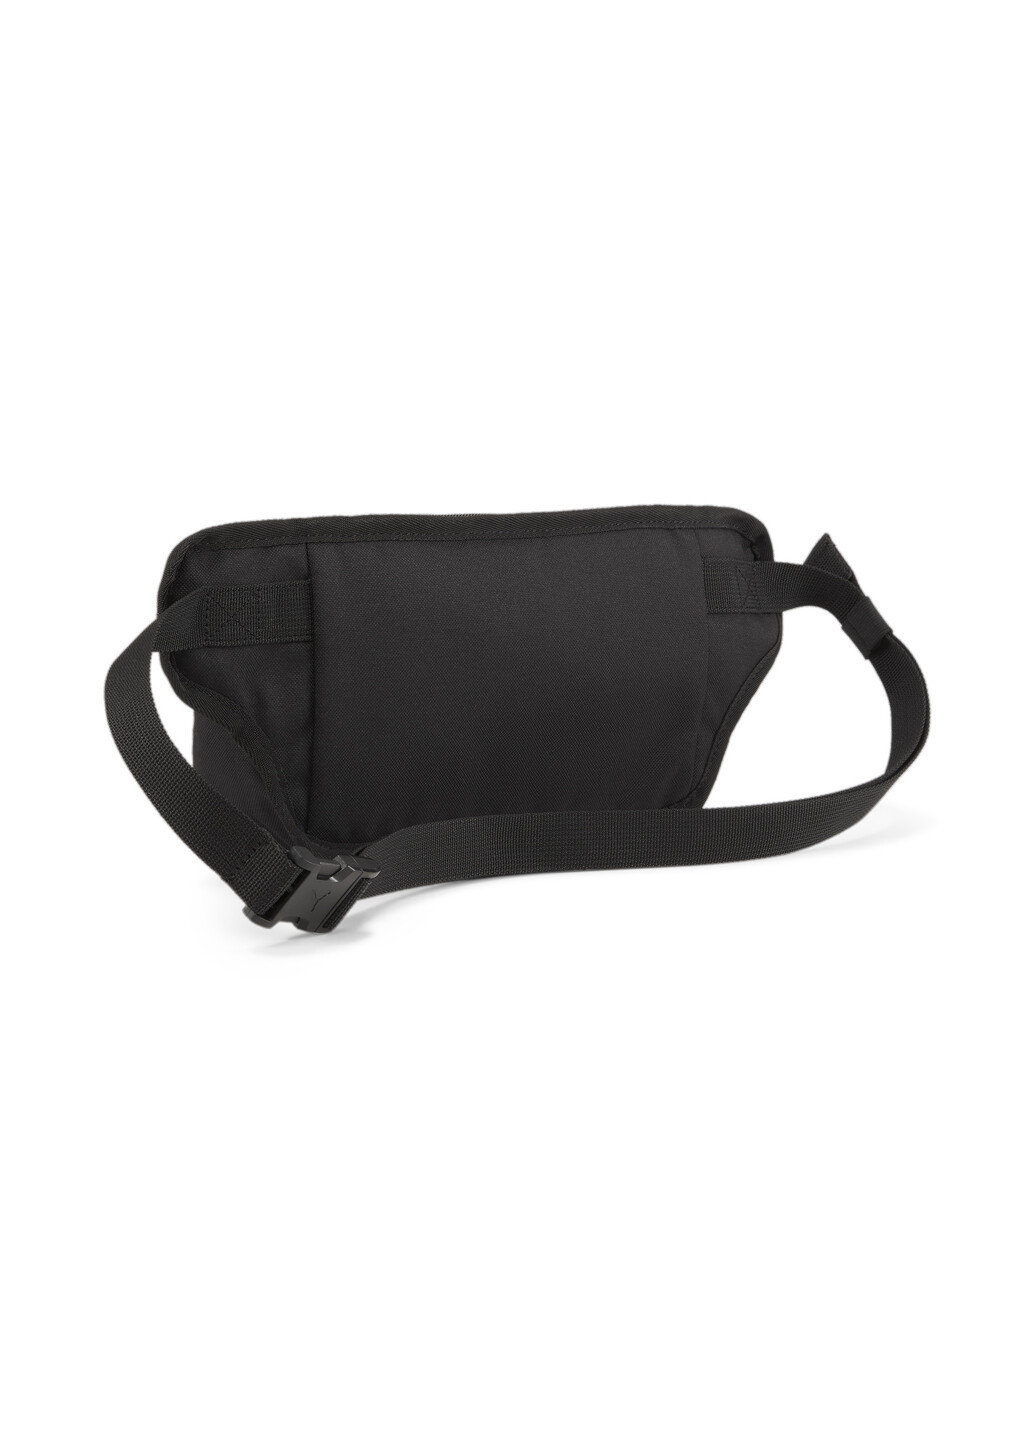 Сумка Style Waist Bag Puma (278611585)